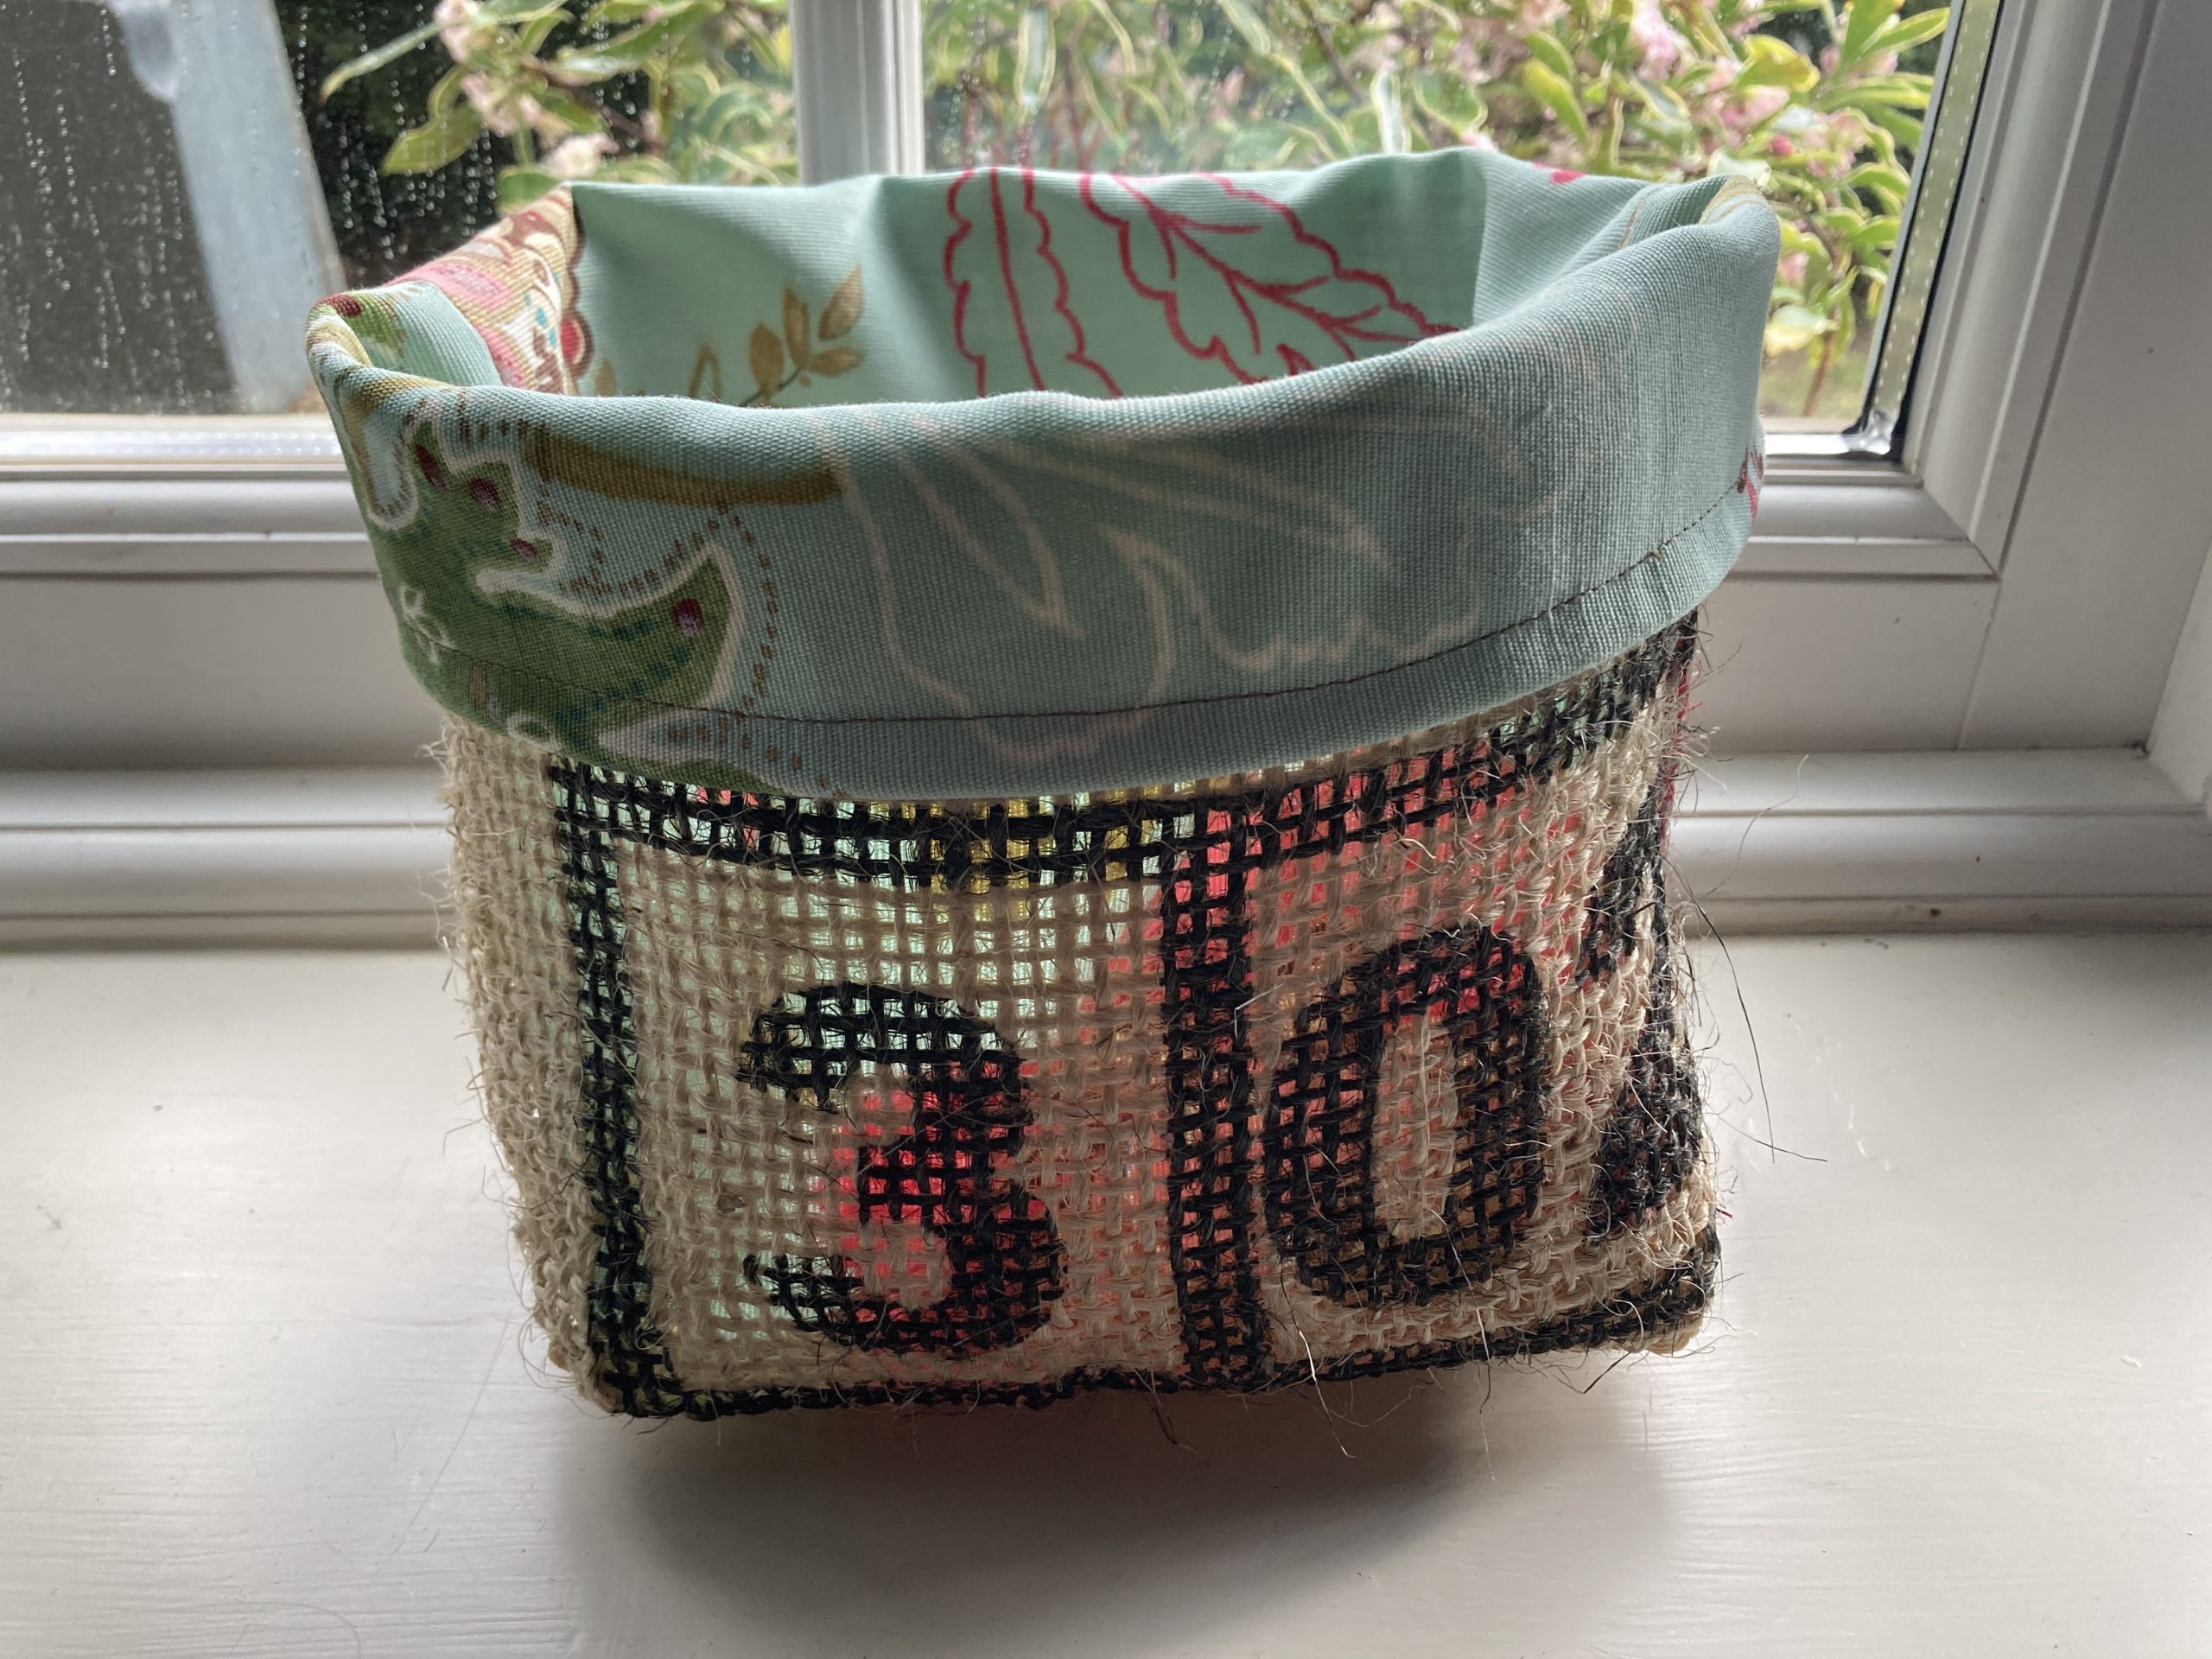 How to make a fabric craft basket